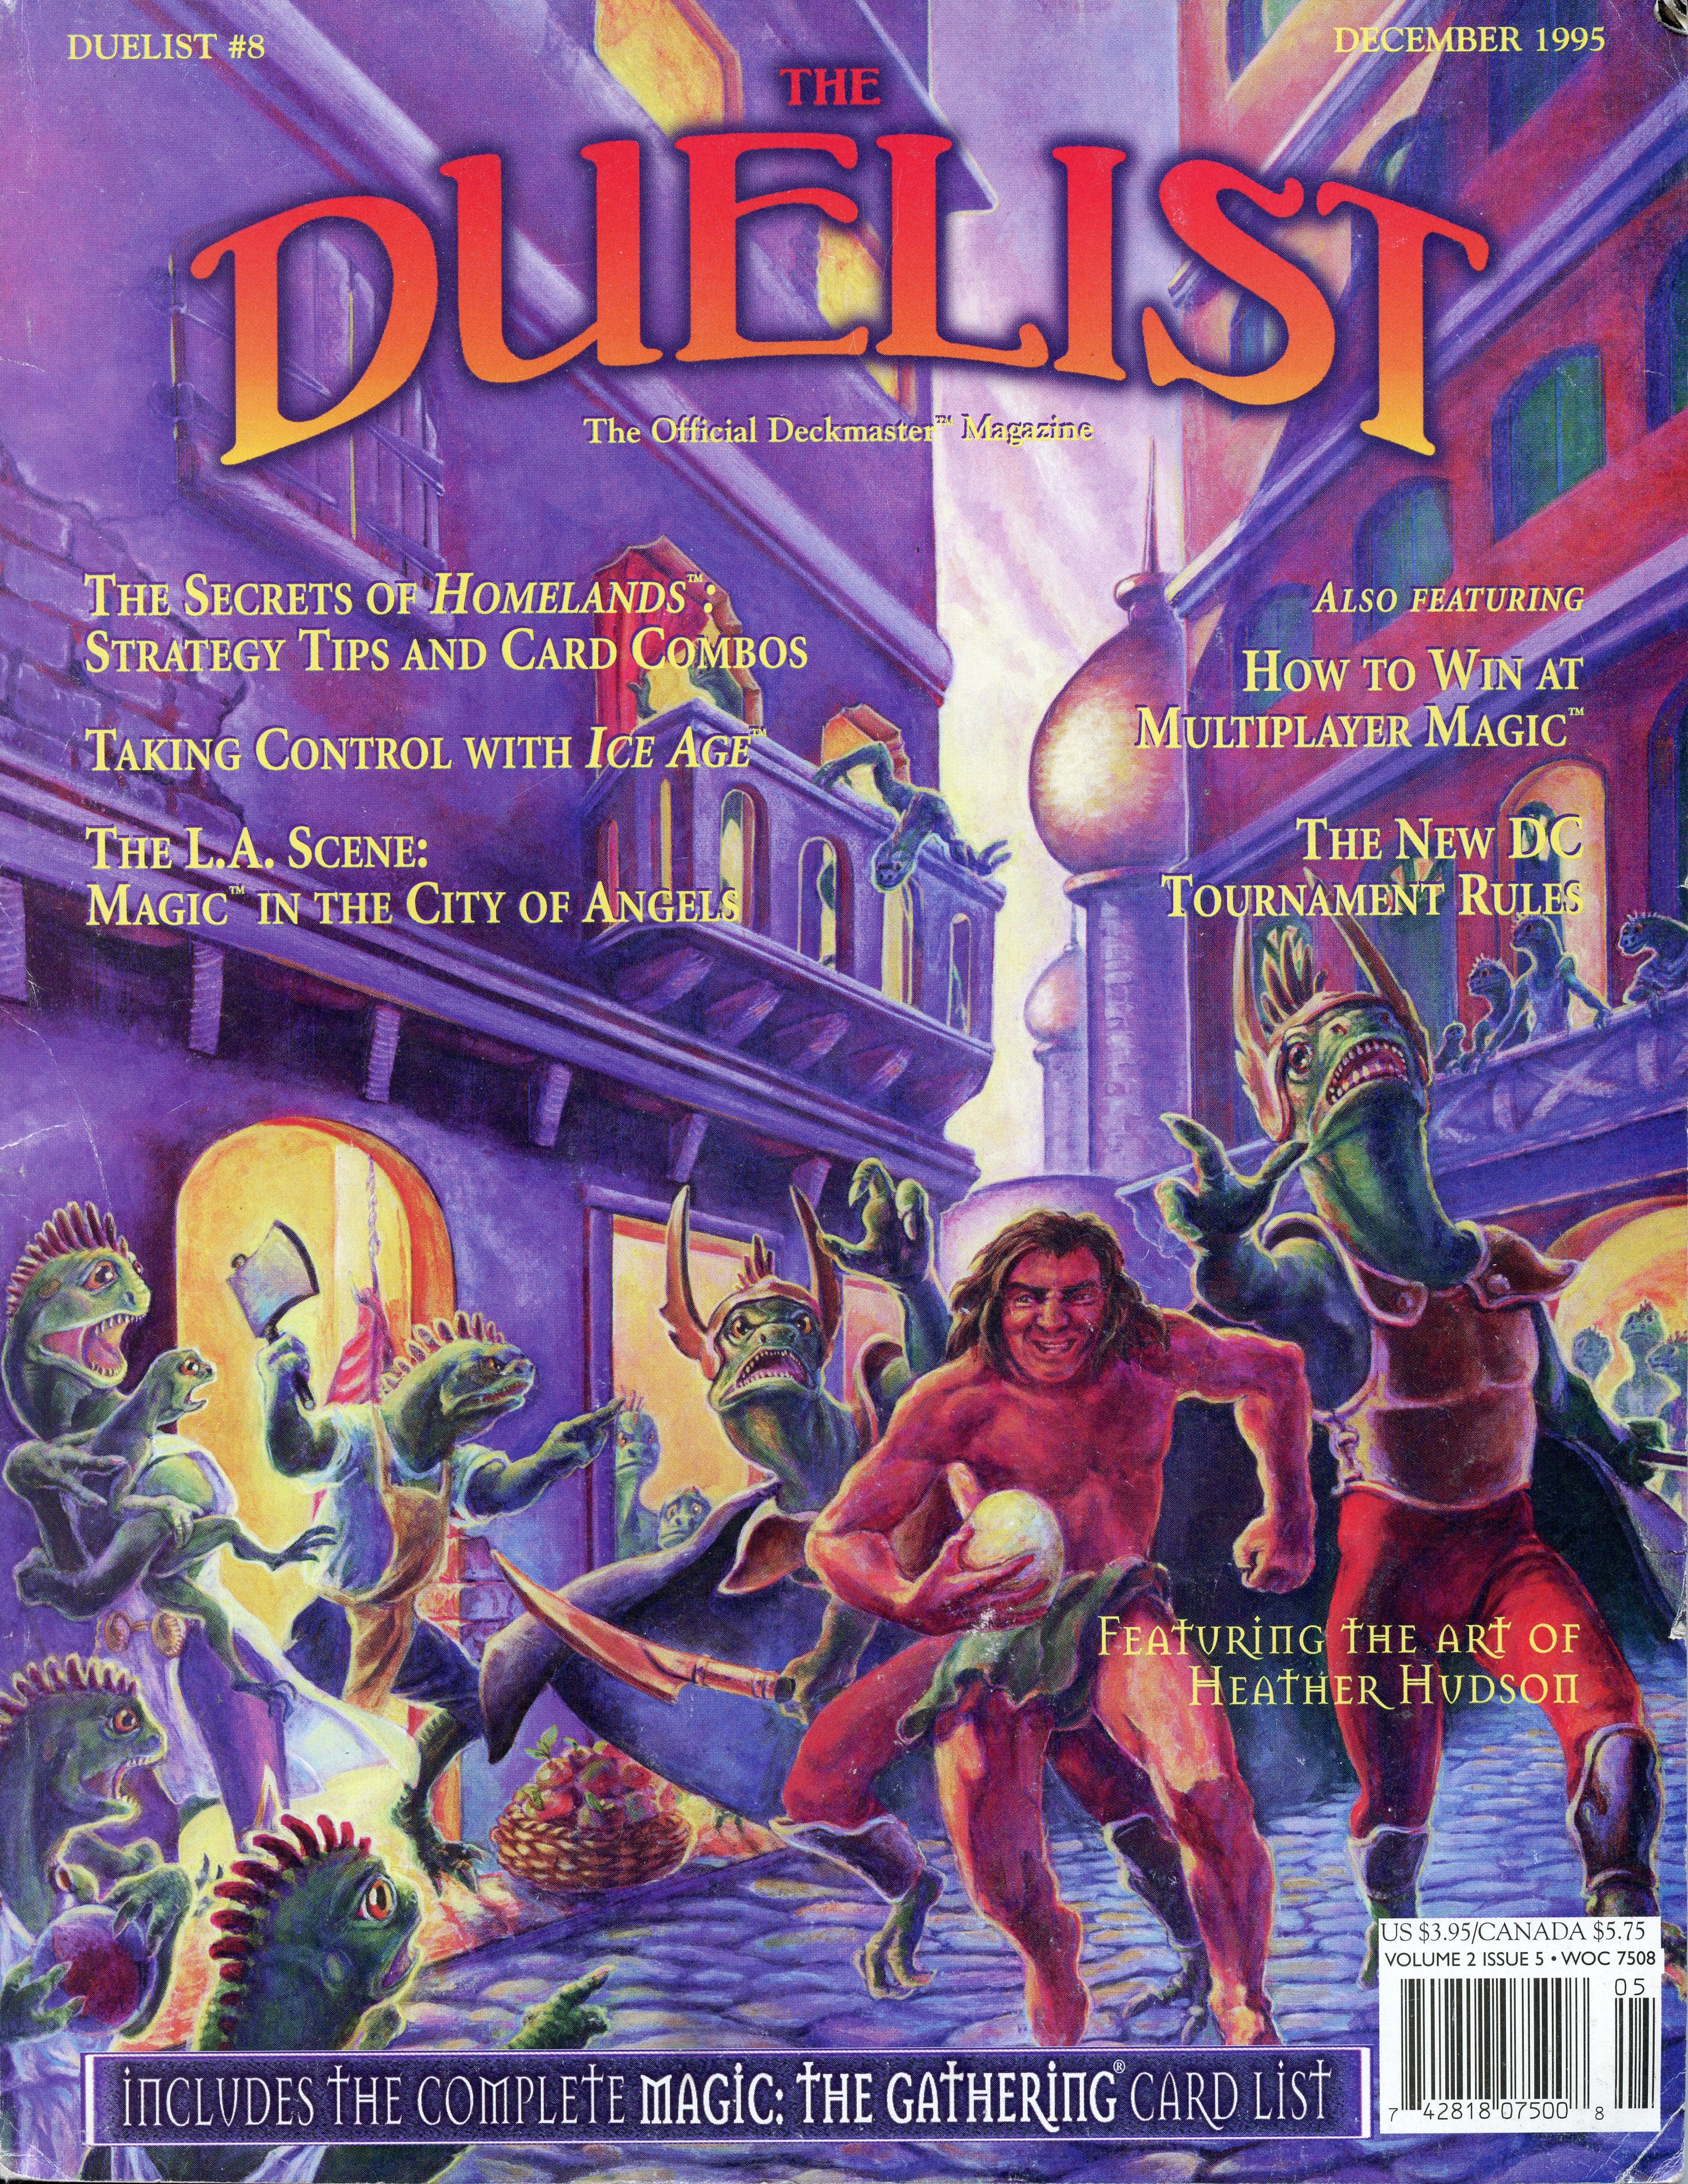 The Duelist #8, December 1995